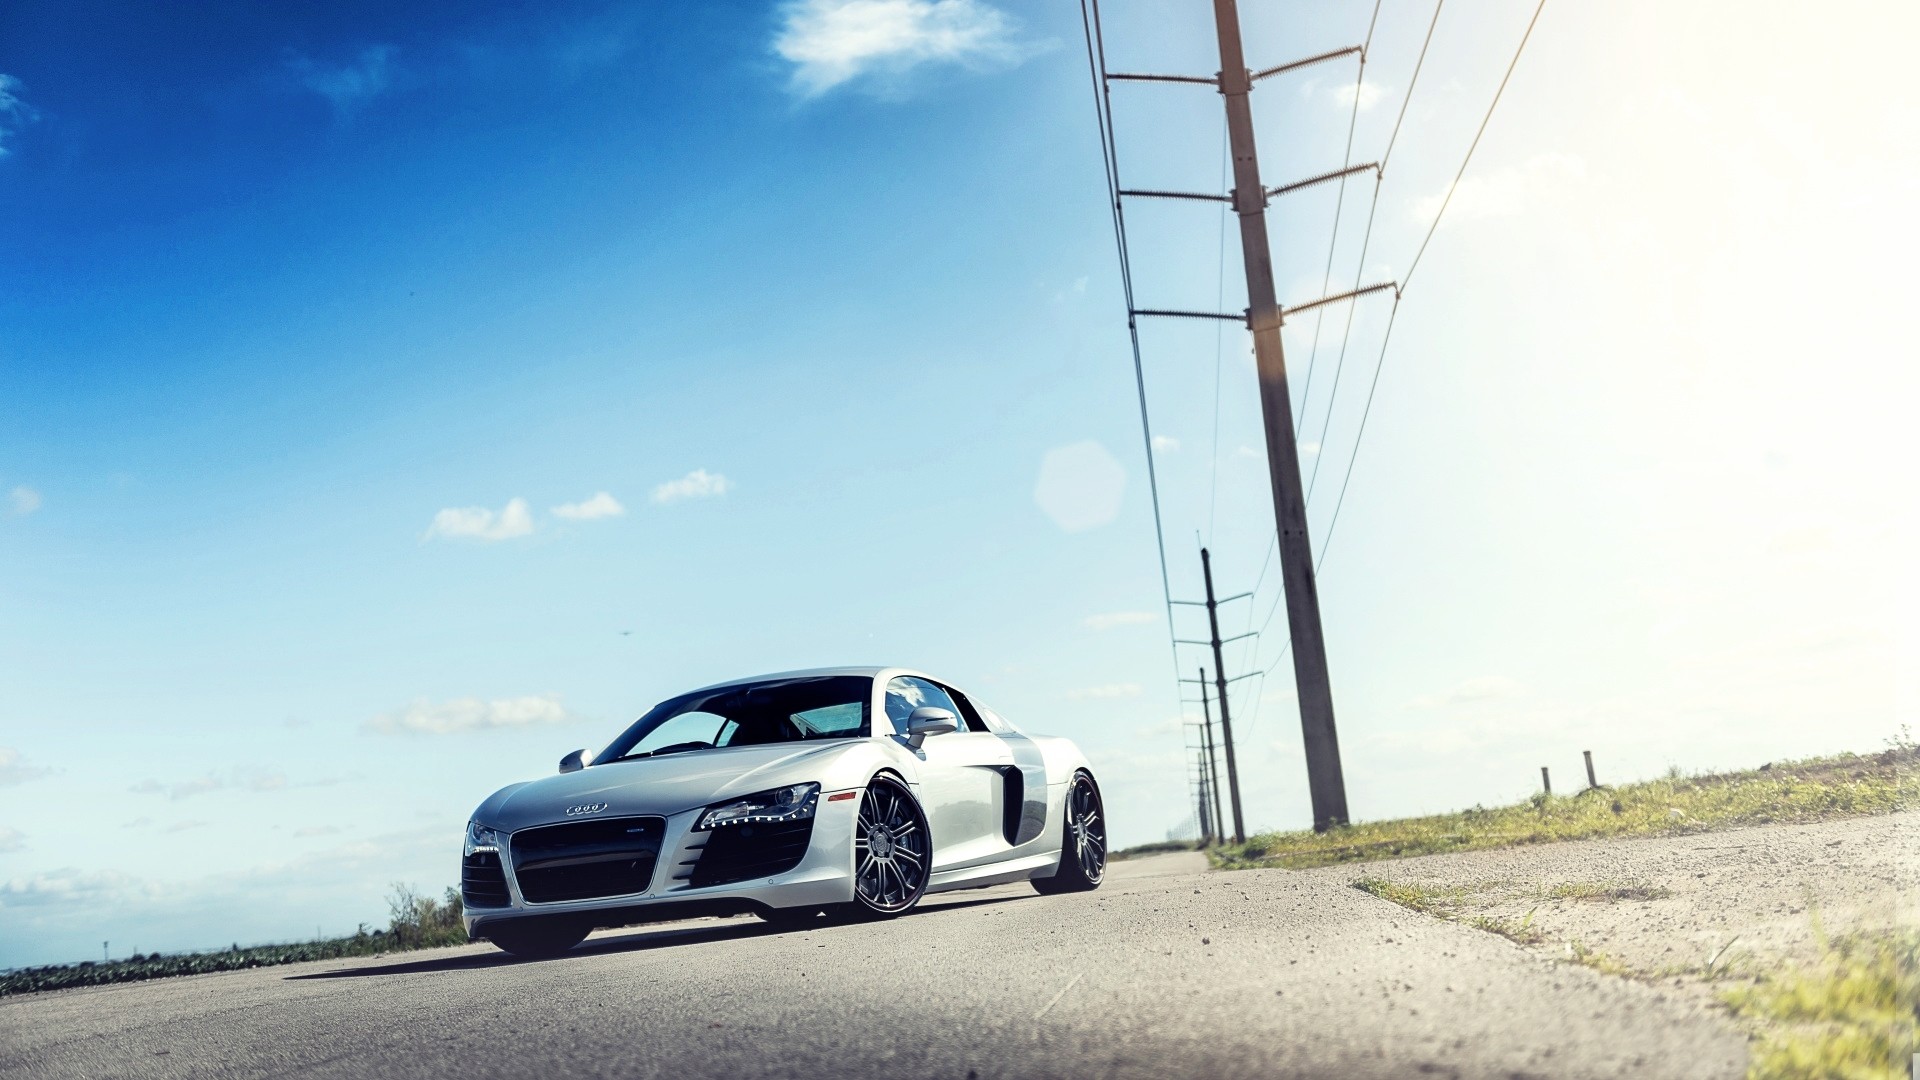 Audi R8 1080p HD Wallpaper Cars HD Wallpapers Source